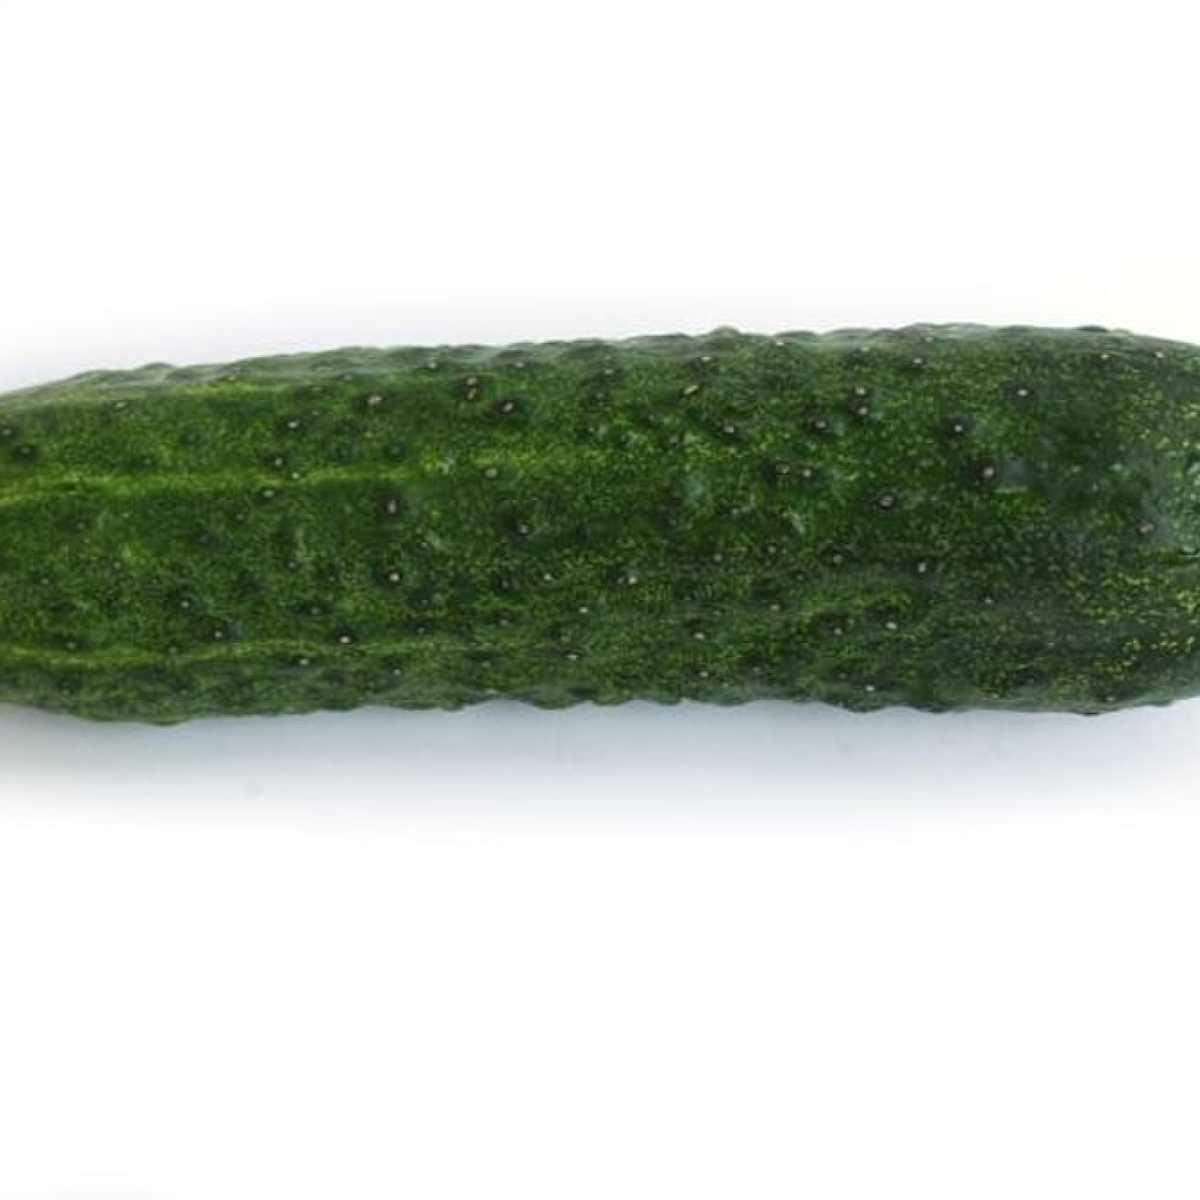 Organic Cucumber - Safeway